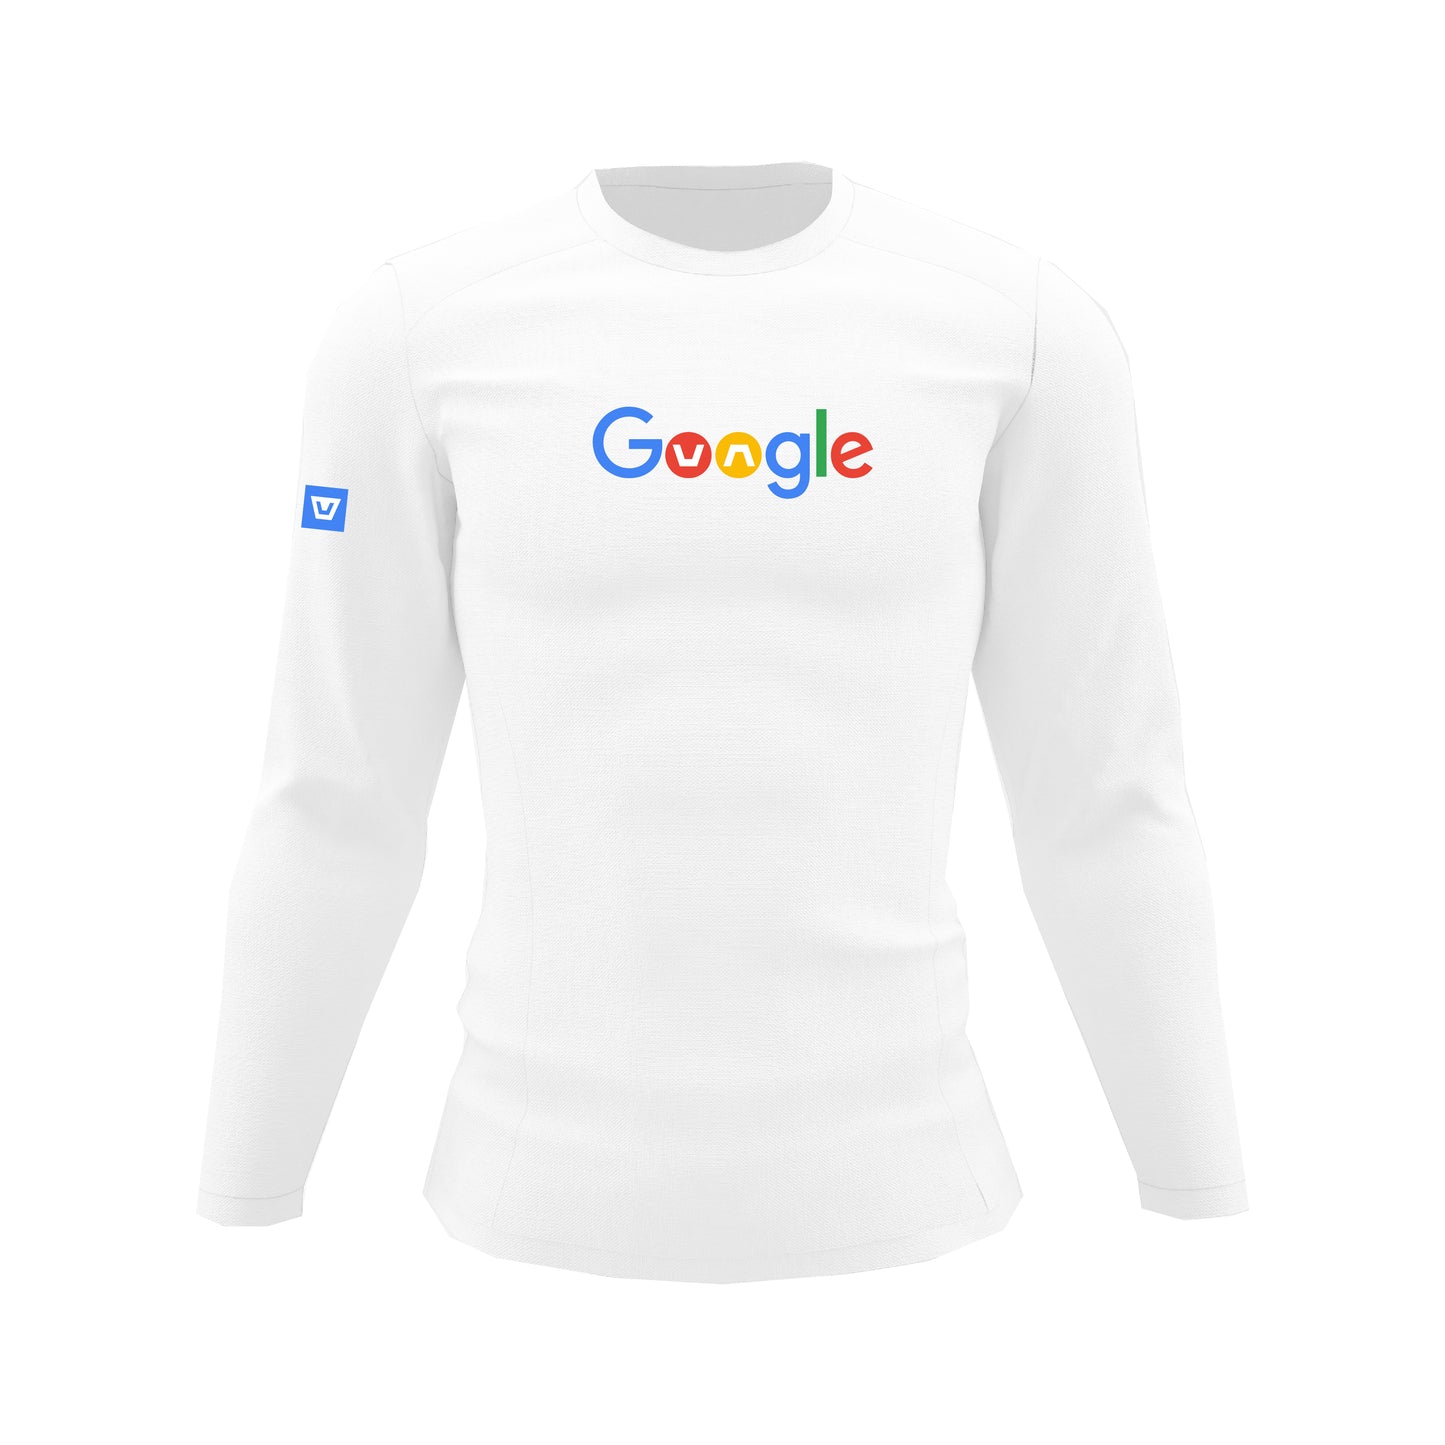 Google - Marine Force ® Sweatshirt by Athletic Forces -  Model 1